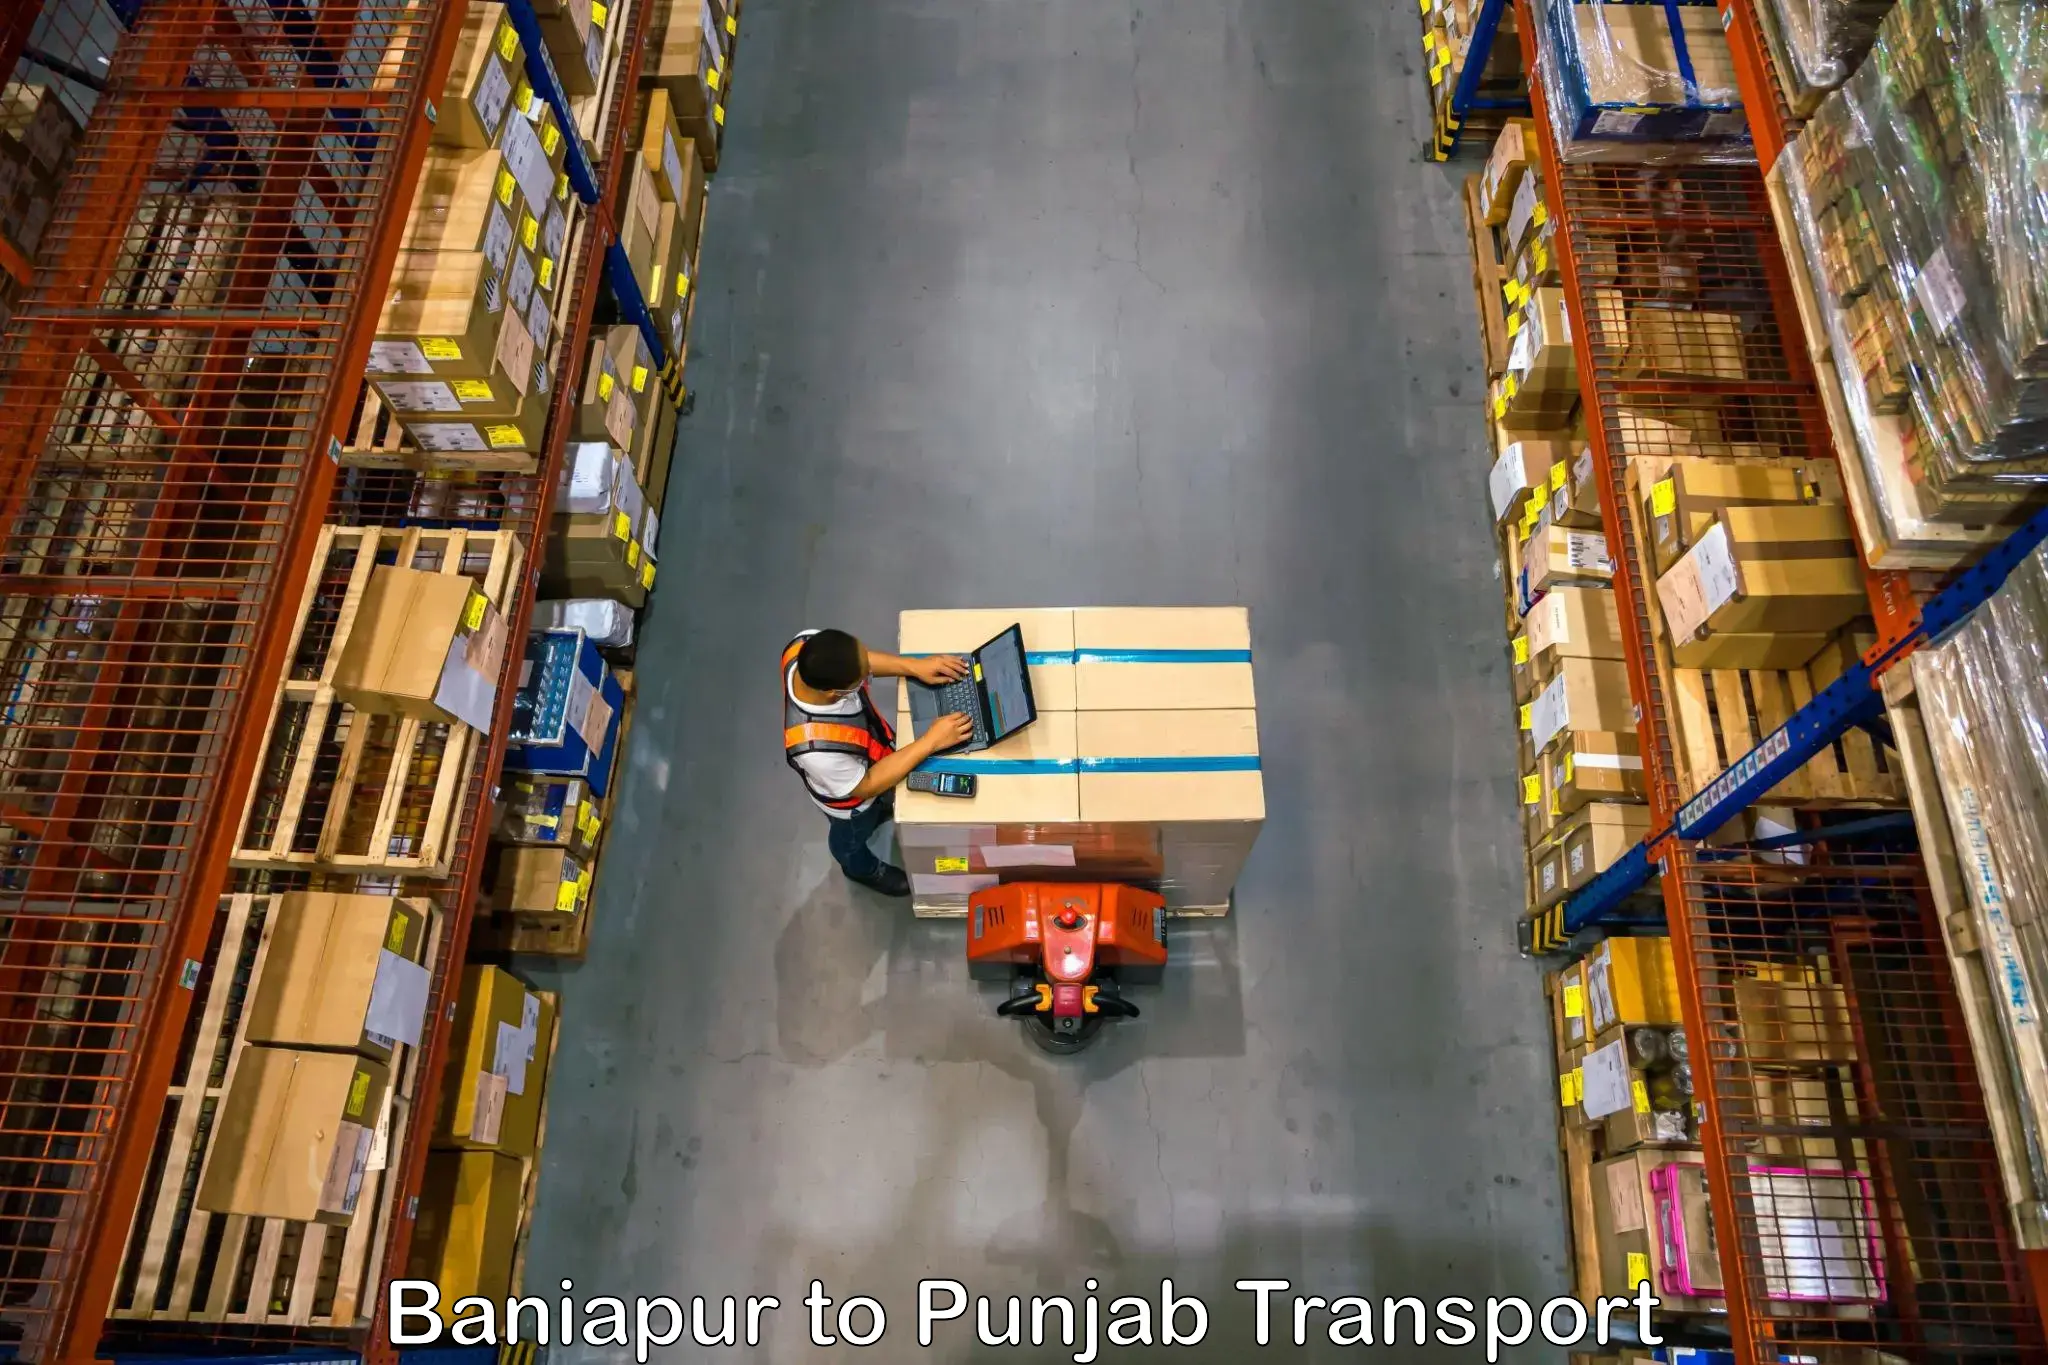 Truck transport companies in India Baniapur to Faridkot